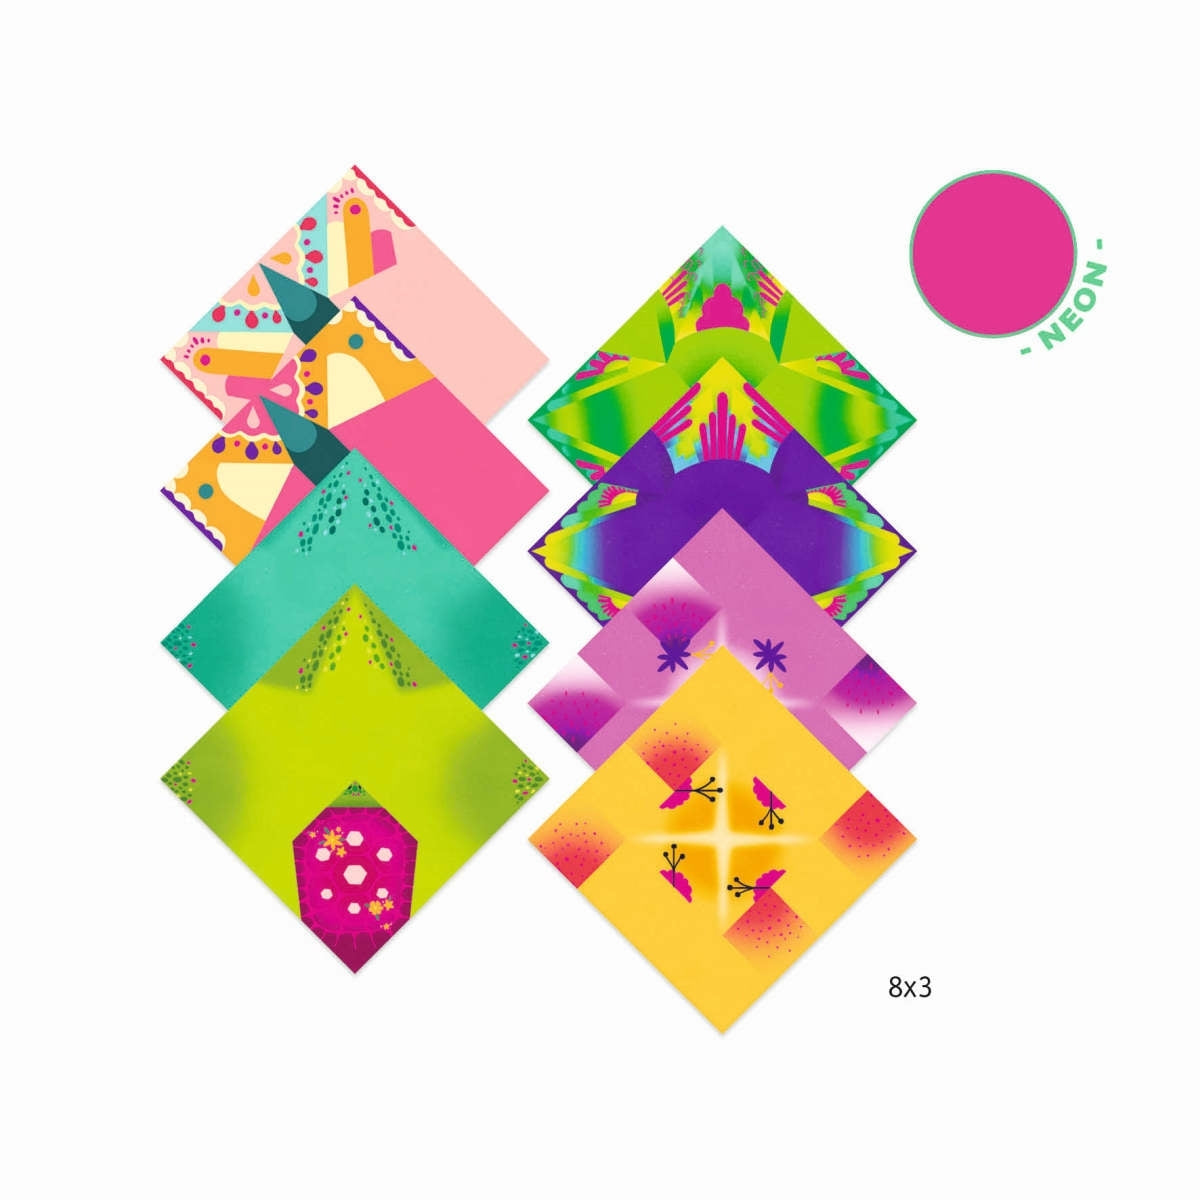 Origami - Tropics von DJECO